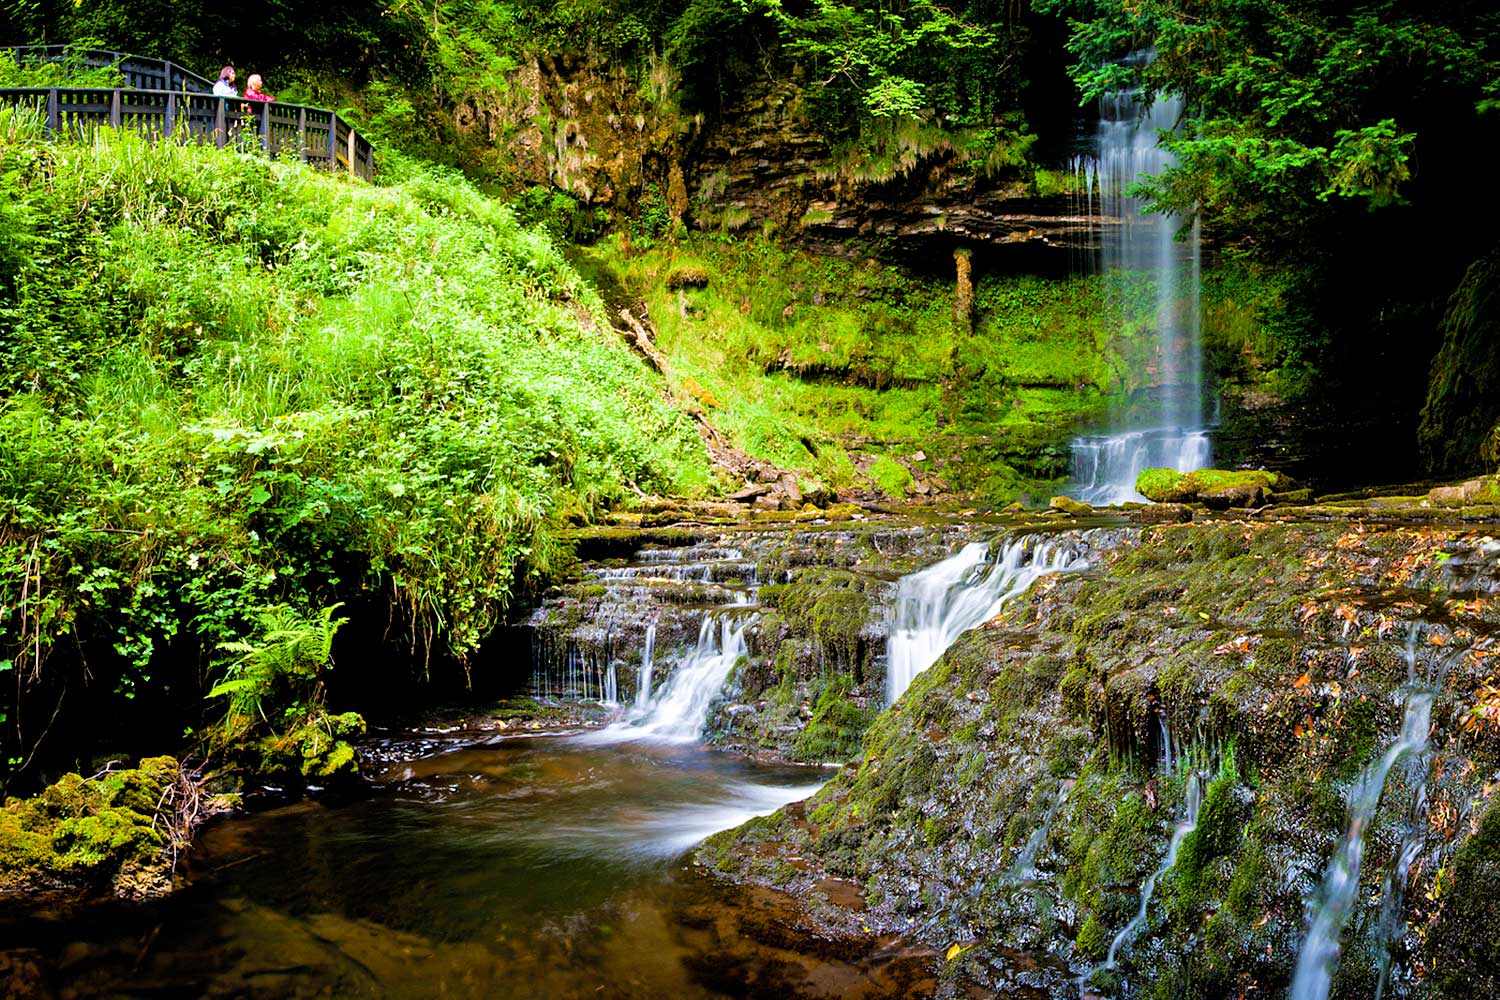 Glencar-Waterfall in County Leitrim